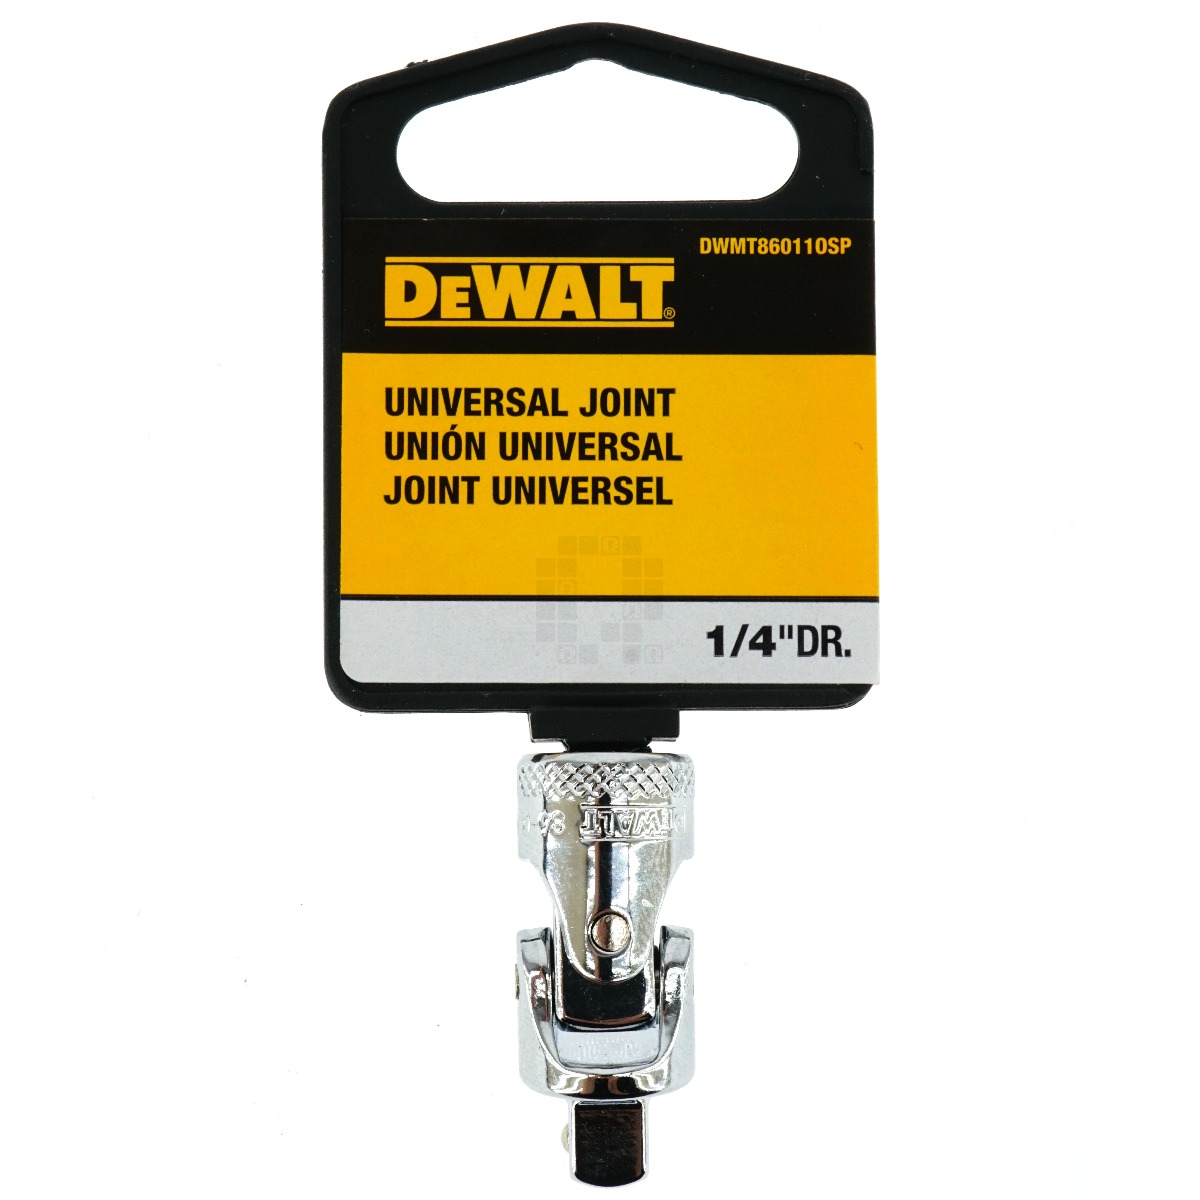 Dewalt DWMT86011OSP 1/4" Universal Joint